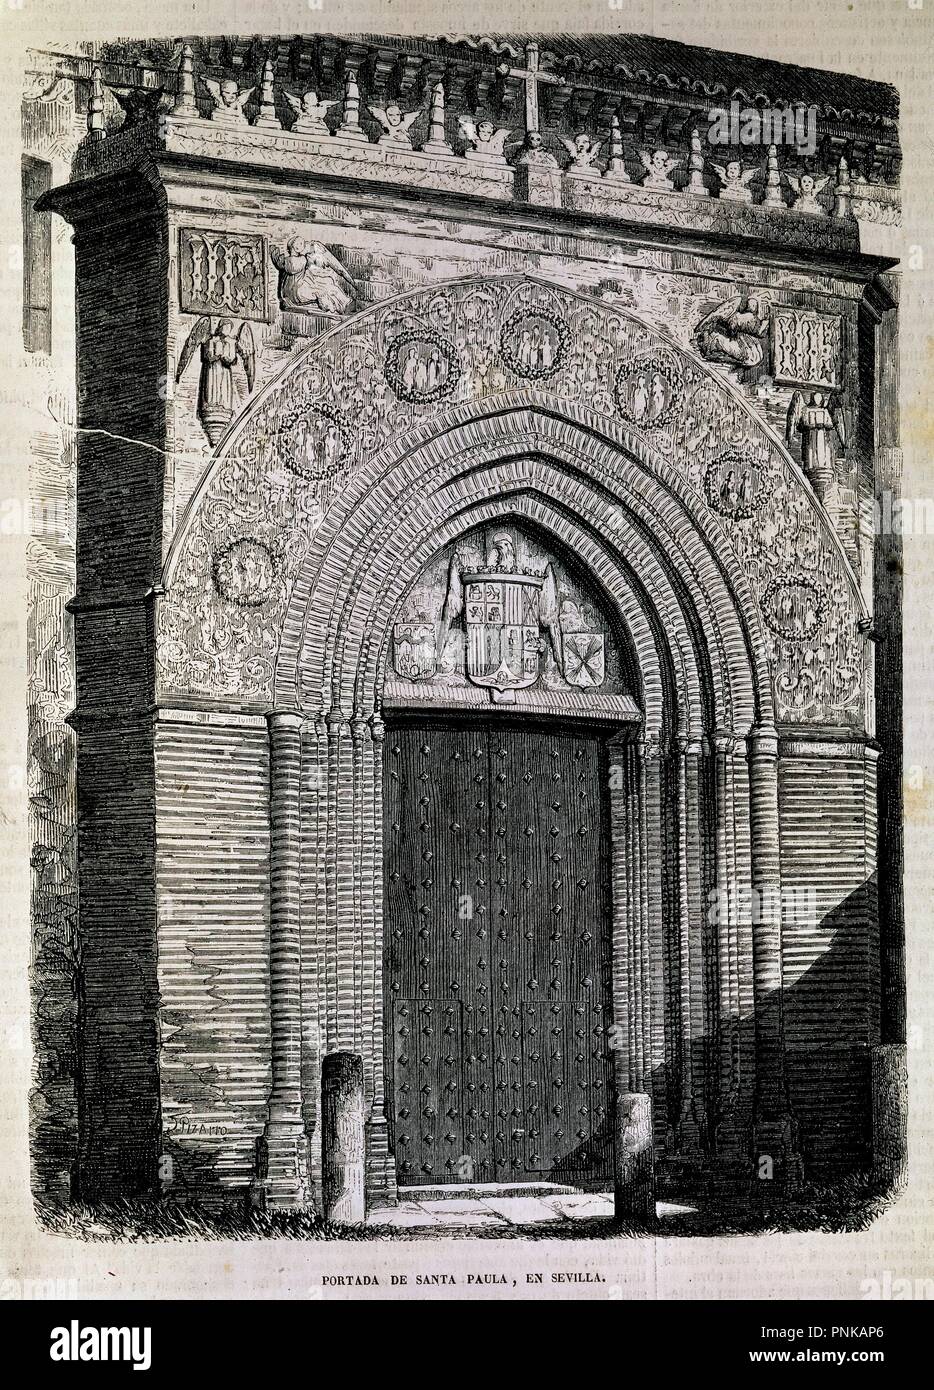 XILOGRAFIA - PORTADA DEL CONVENTO DE SANTA PAULA EN SEVILLA - 12/8/1860. Auteur : PIZARRO, CECILIO. Emplacement : MUSEO ROMANTICO-gravure. MADRID. L'ESPAGNE. Banque D'Images